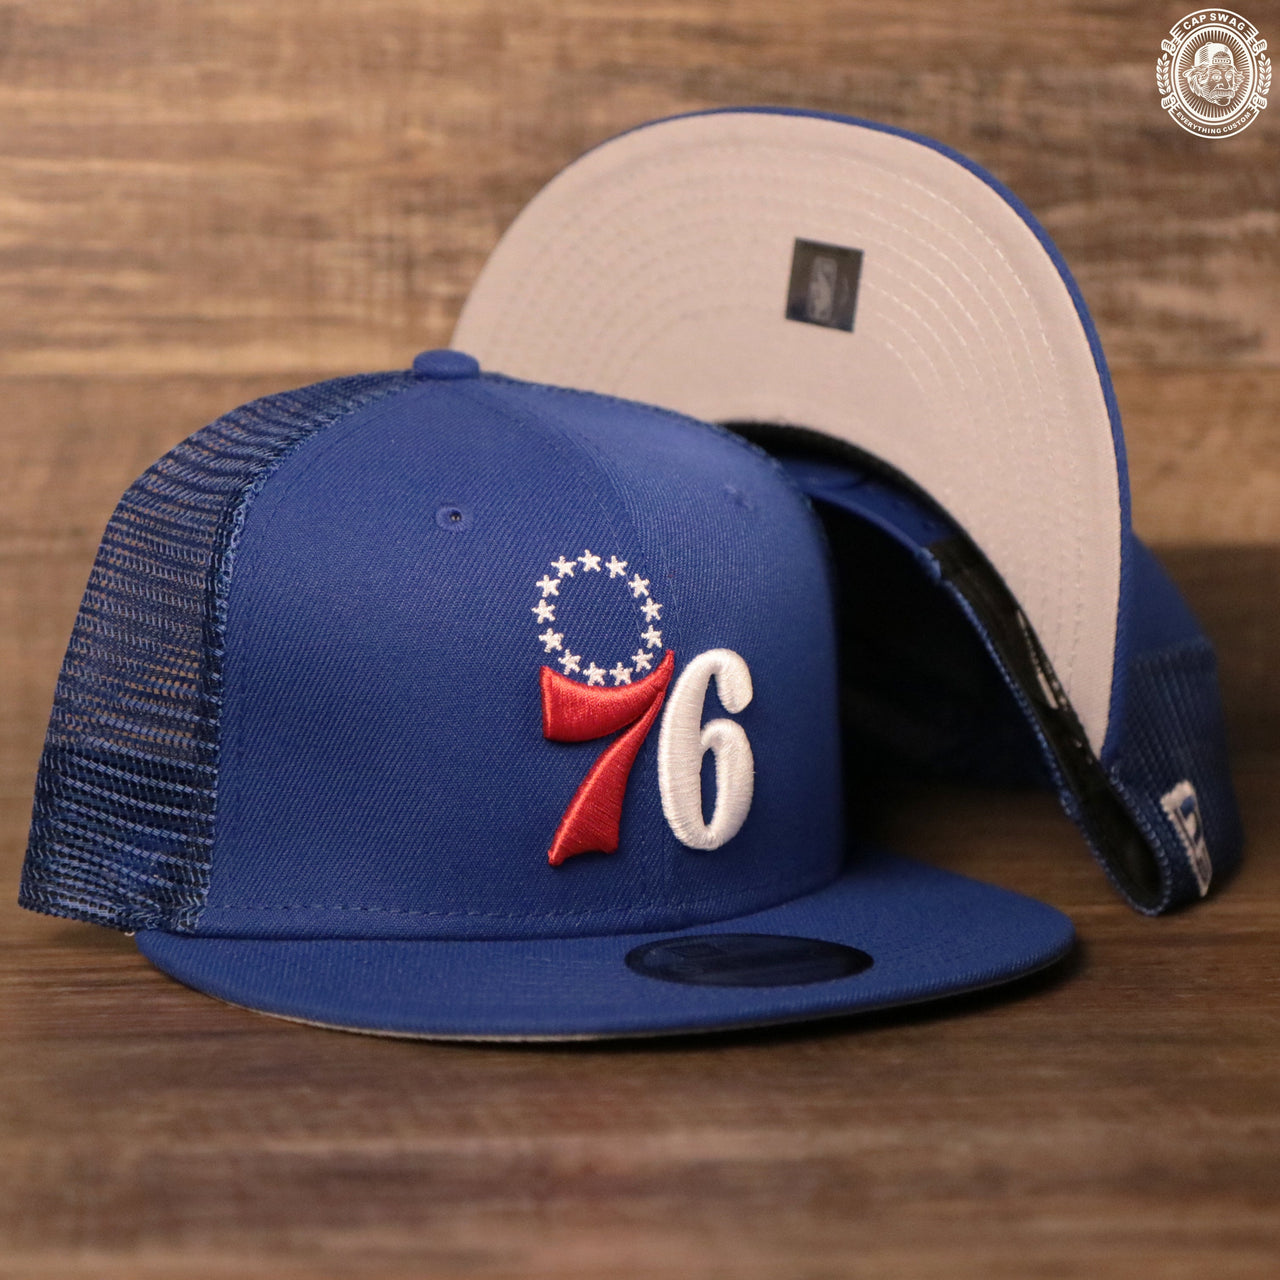 The royal blue Philadelphia 76ers mesh 9fifty snapback hat by New Era.